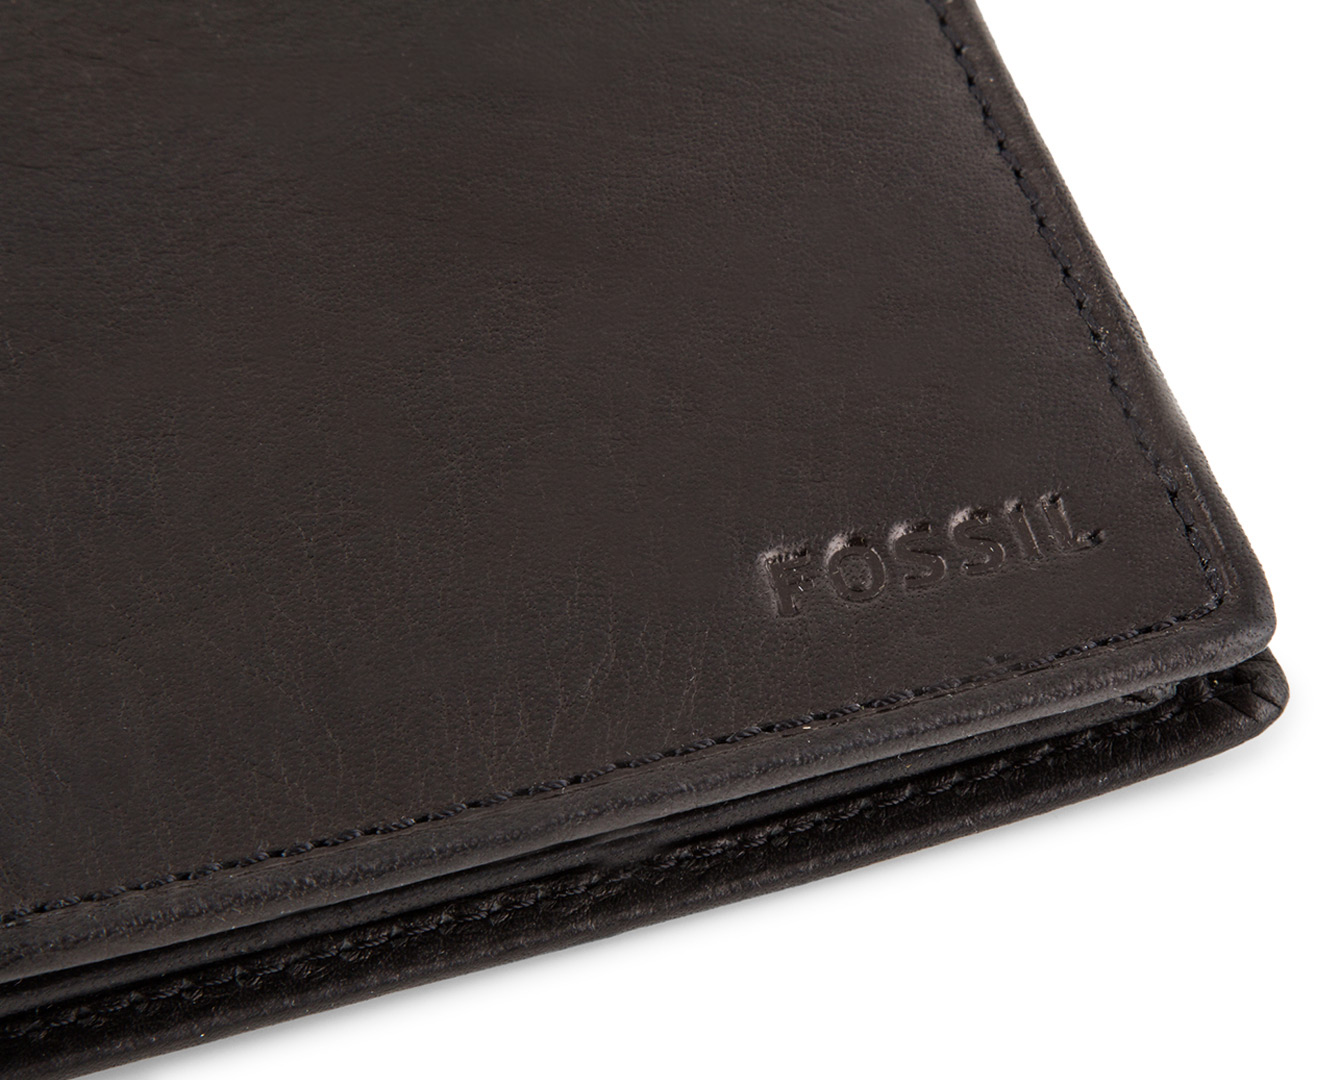 Fossil Men's Leather Ingram Traveler Trifold Wallet - Black | Catch.com.au